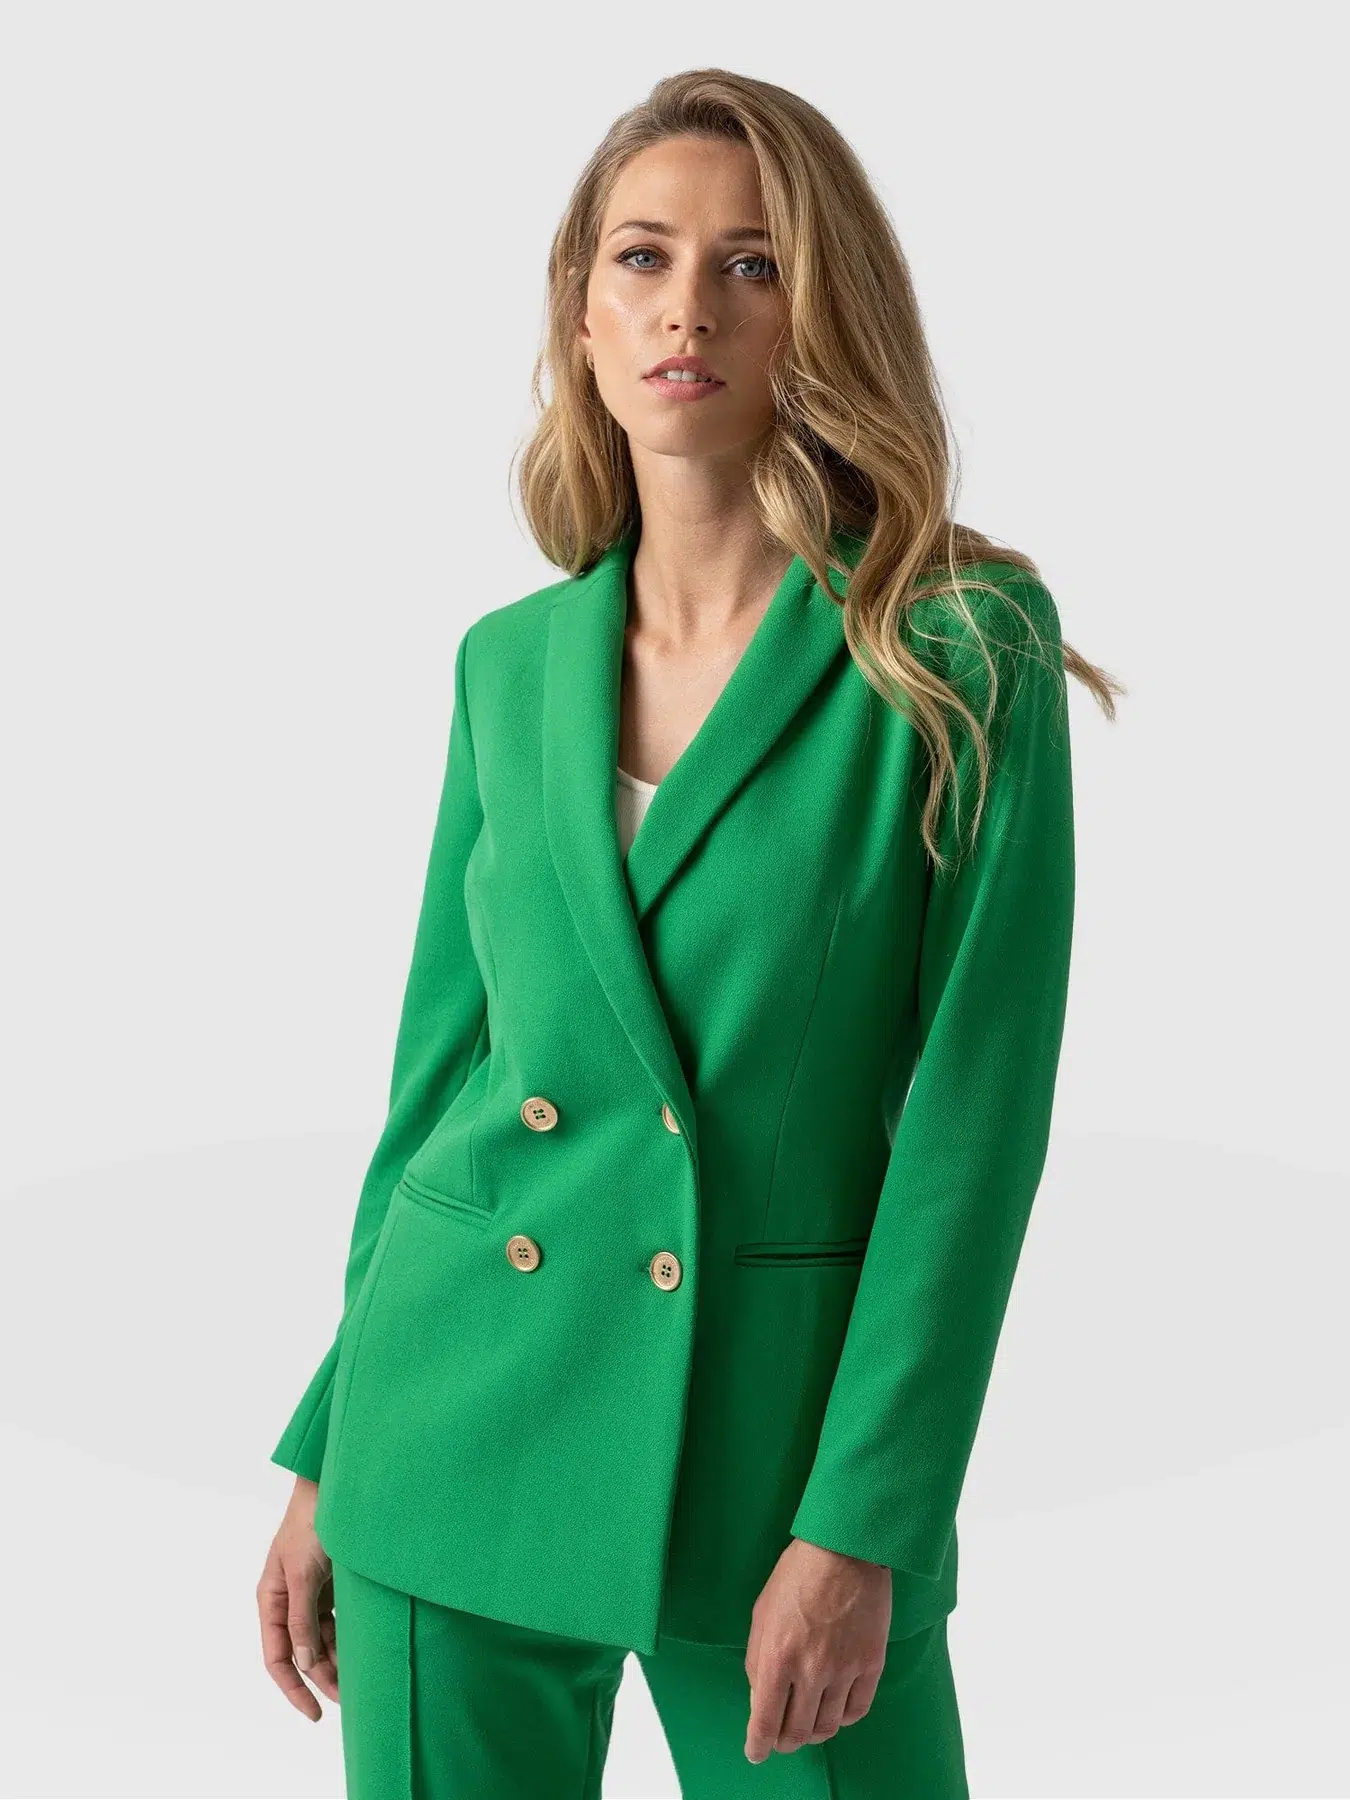 2. Saint + Sofia Cambridge Emerald Green Blazer